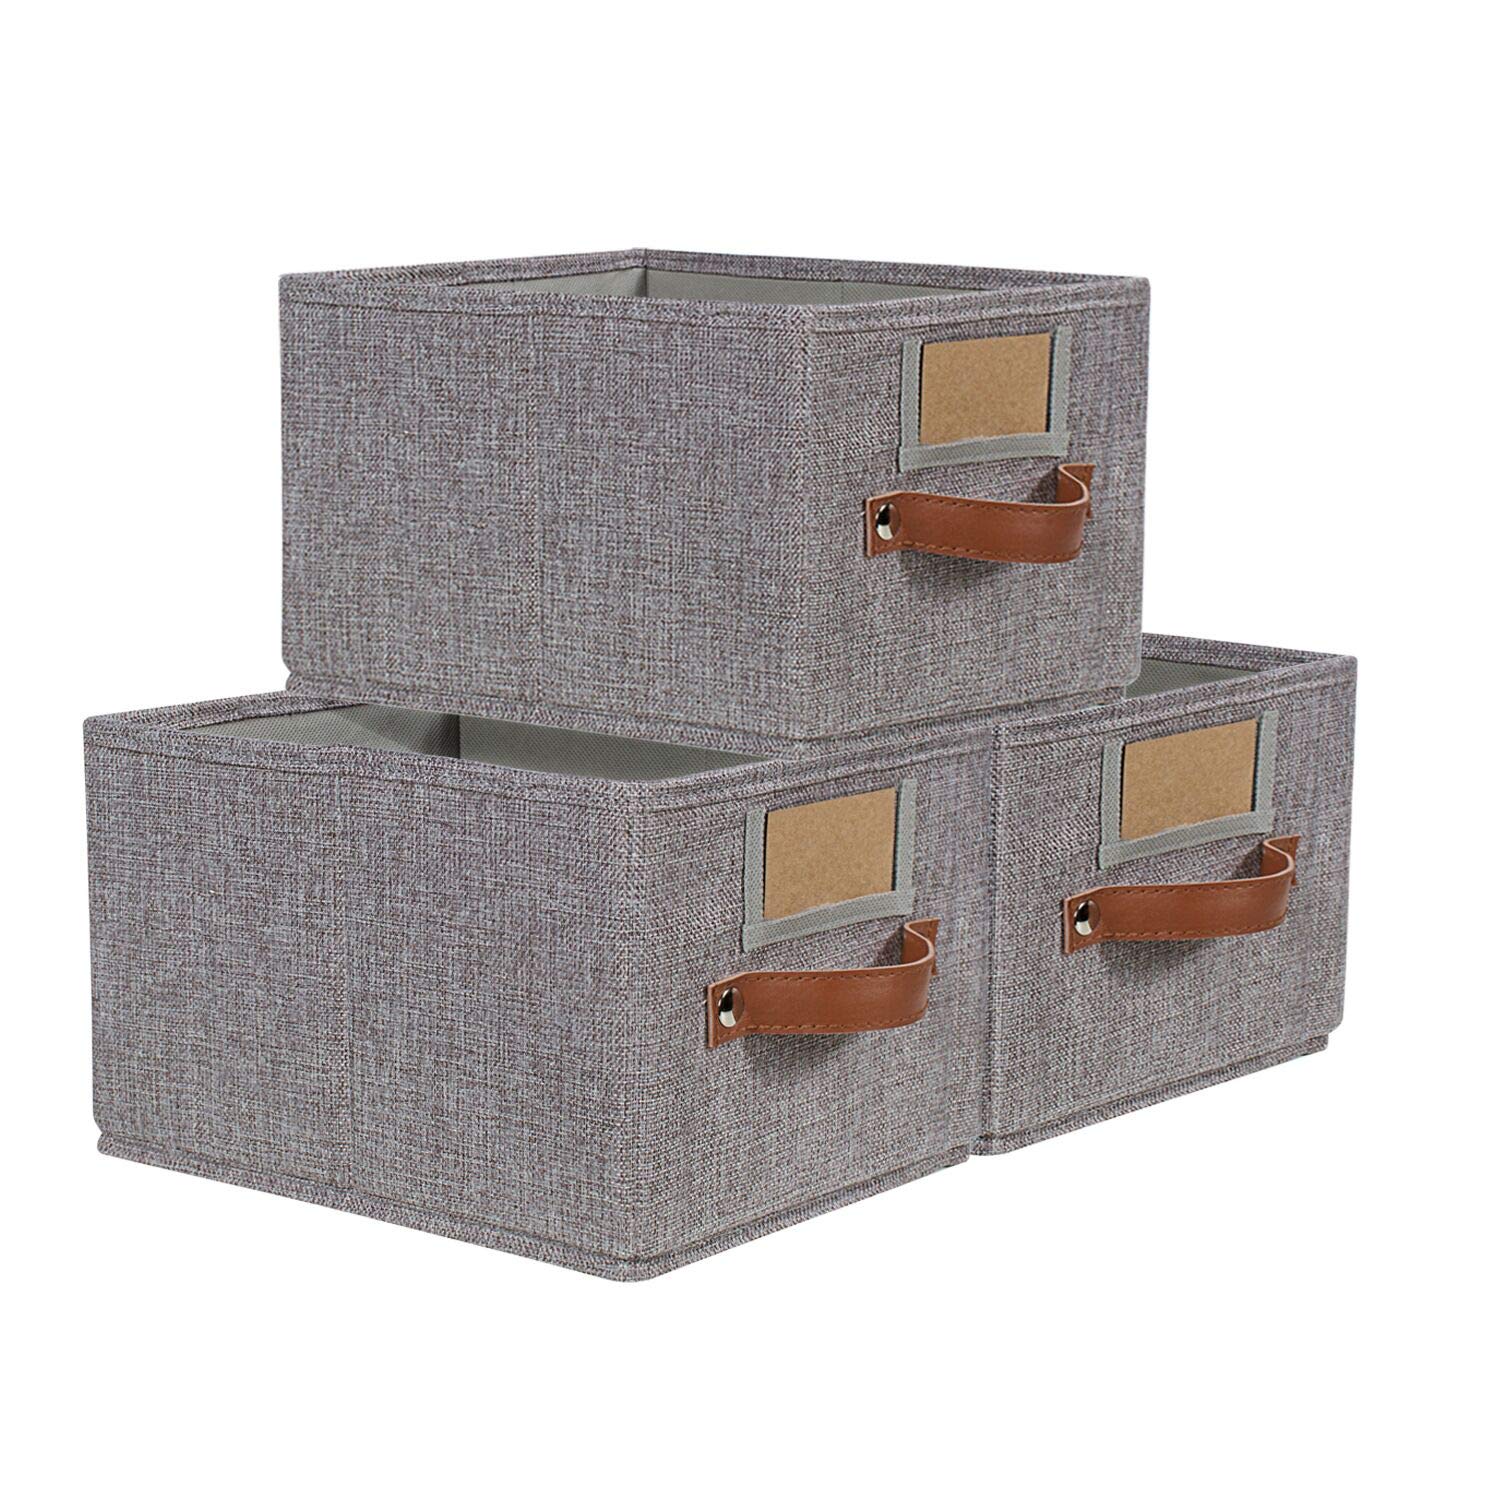 Foldable Storage Baskets for Shelves Set of 3, Fabric Storage Bins